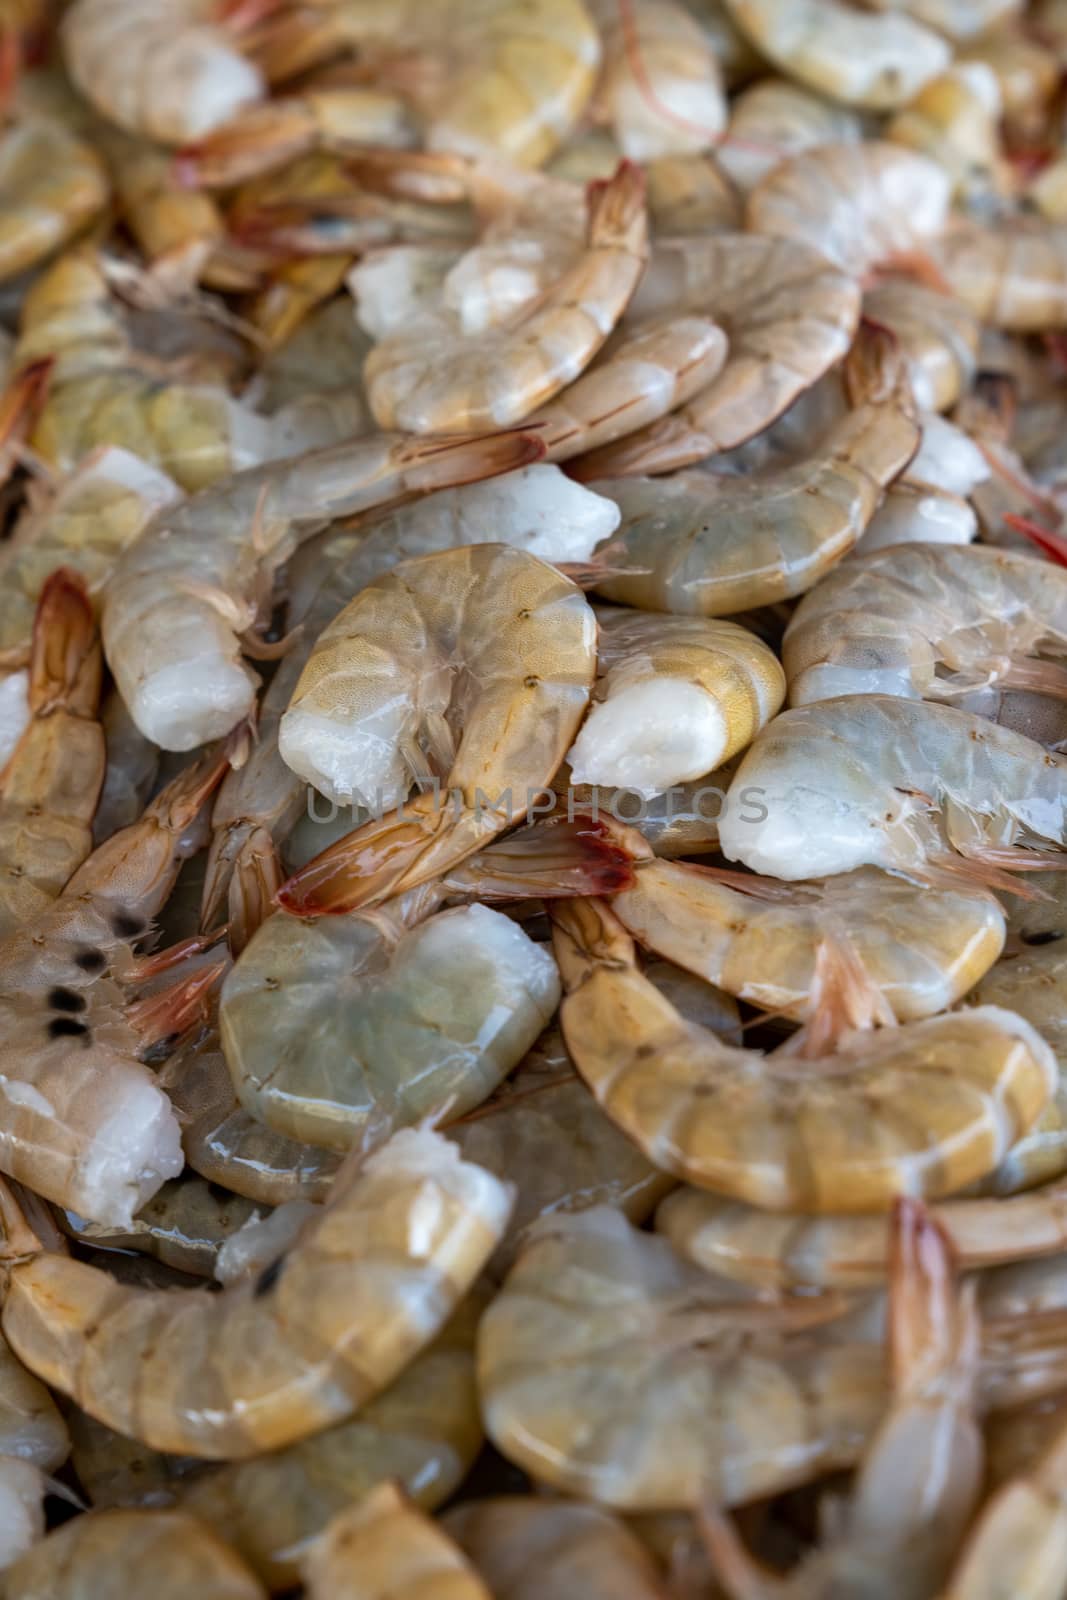 frozen tropical shrimp at the seafood market